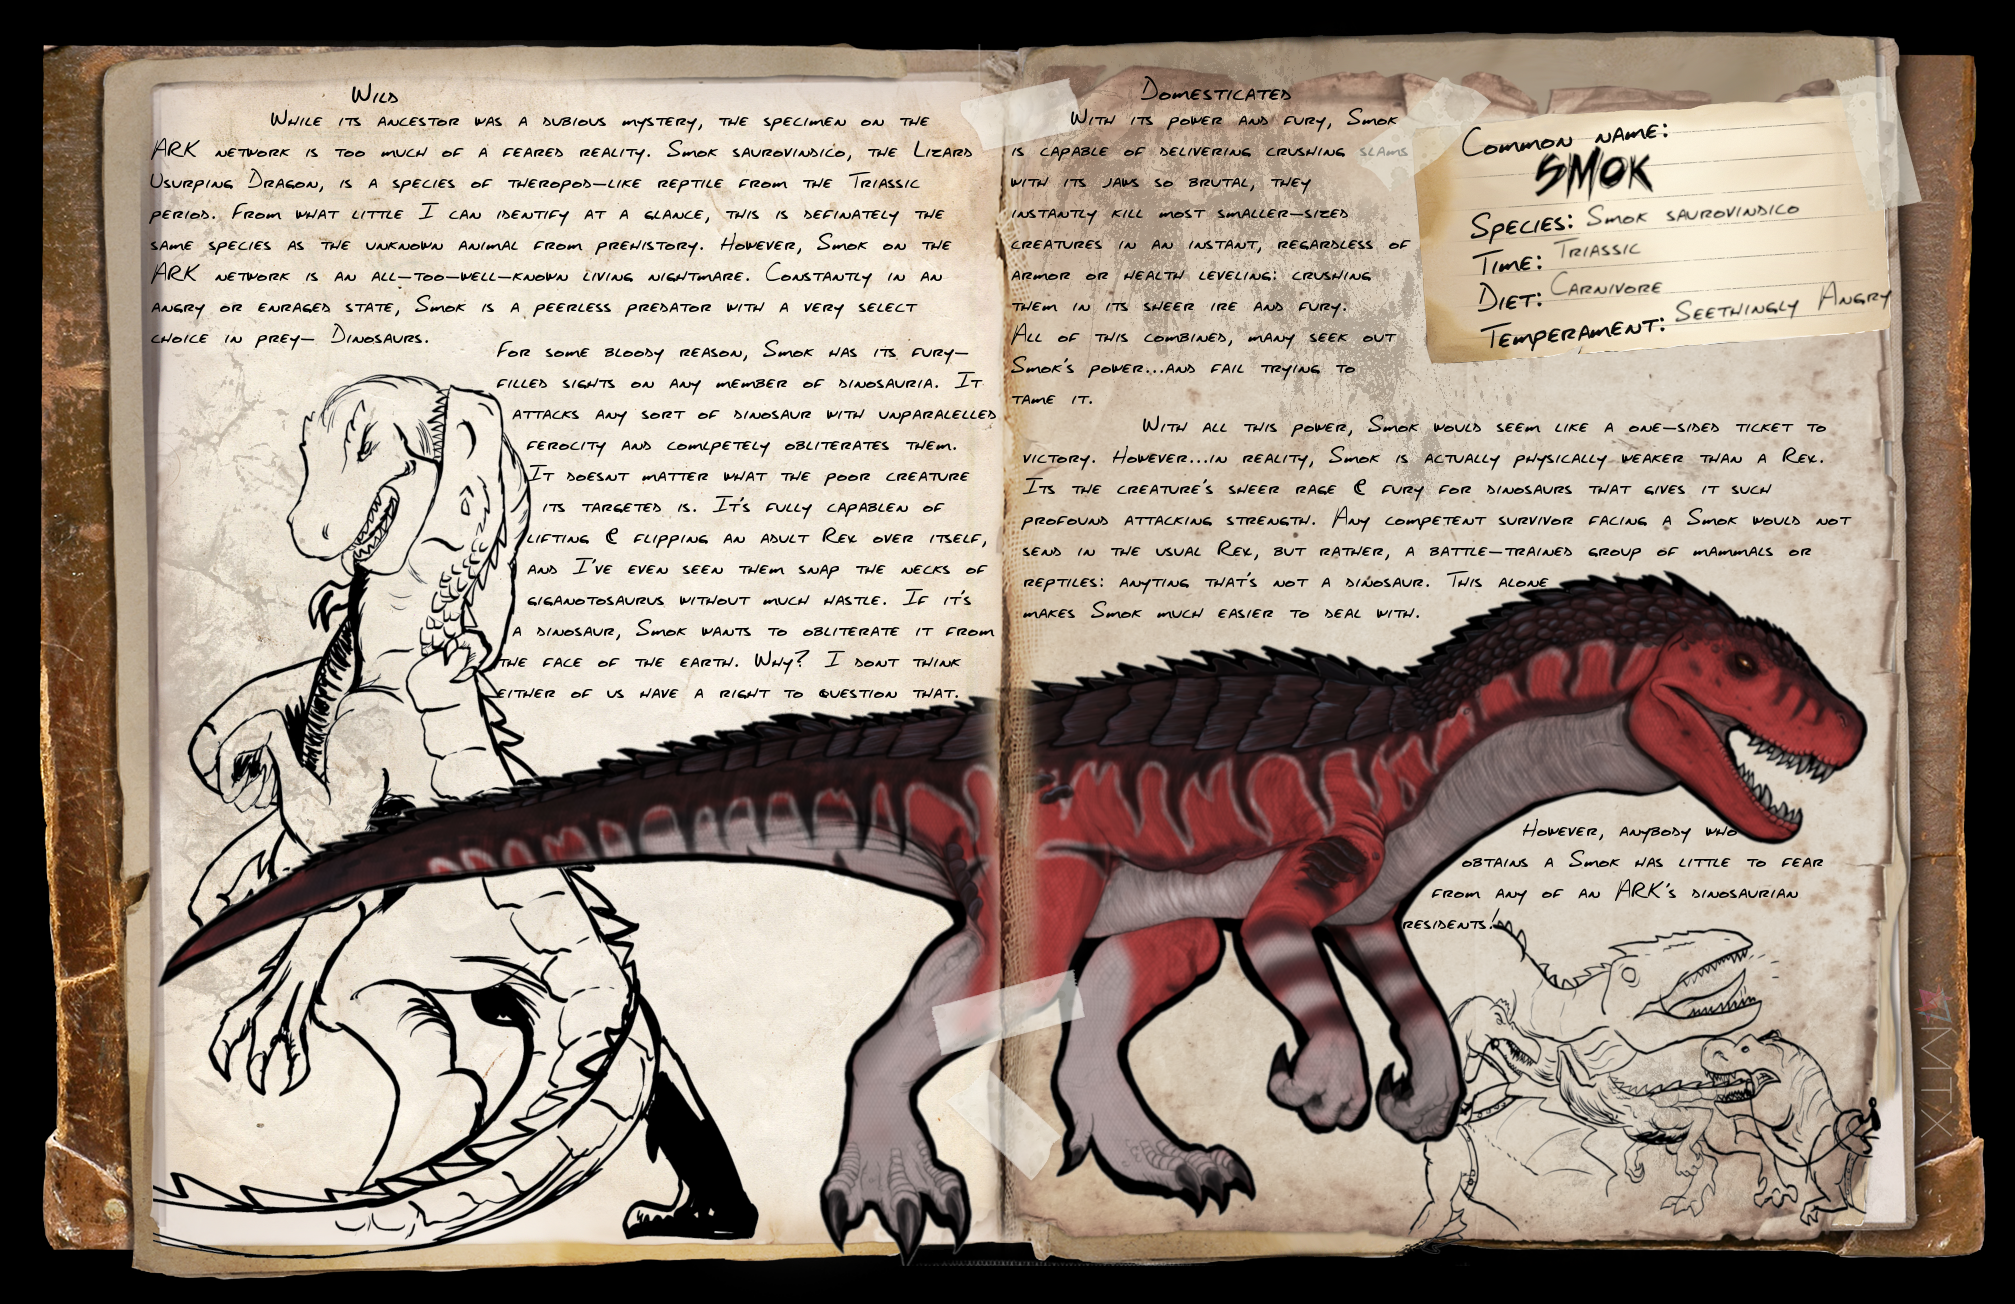 Smok saurovindico | Additional Creatures Wiki | Fandom